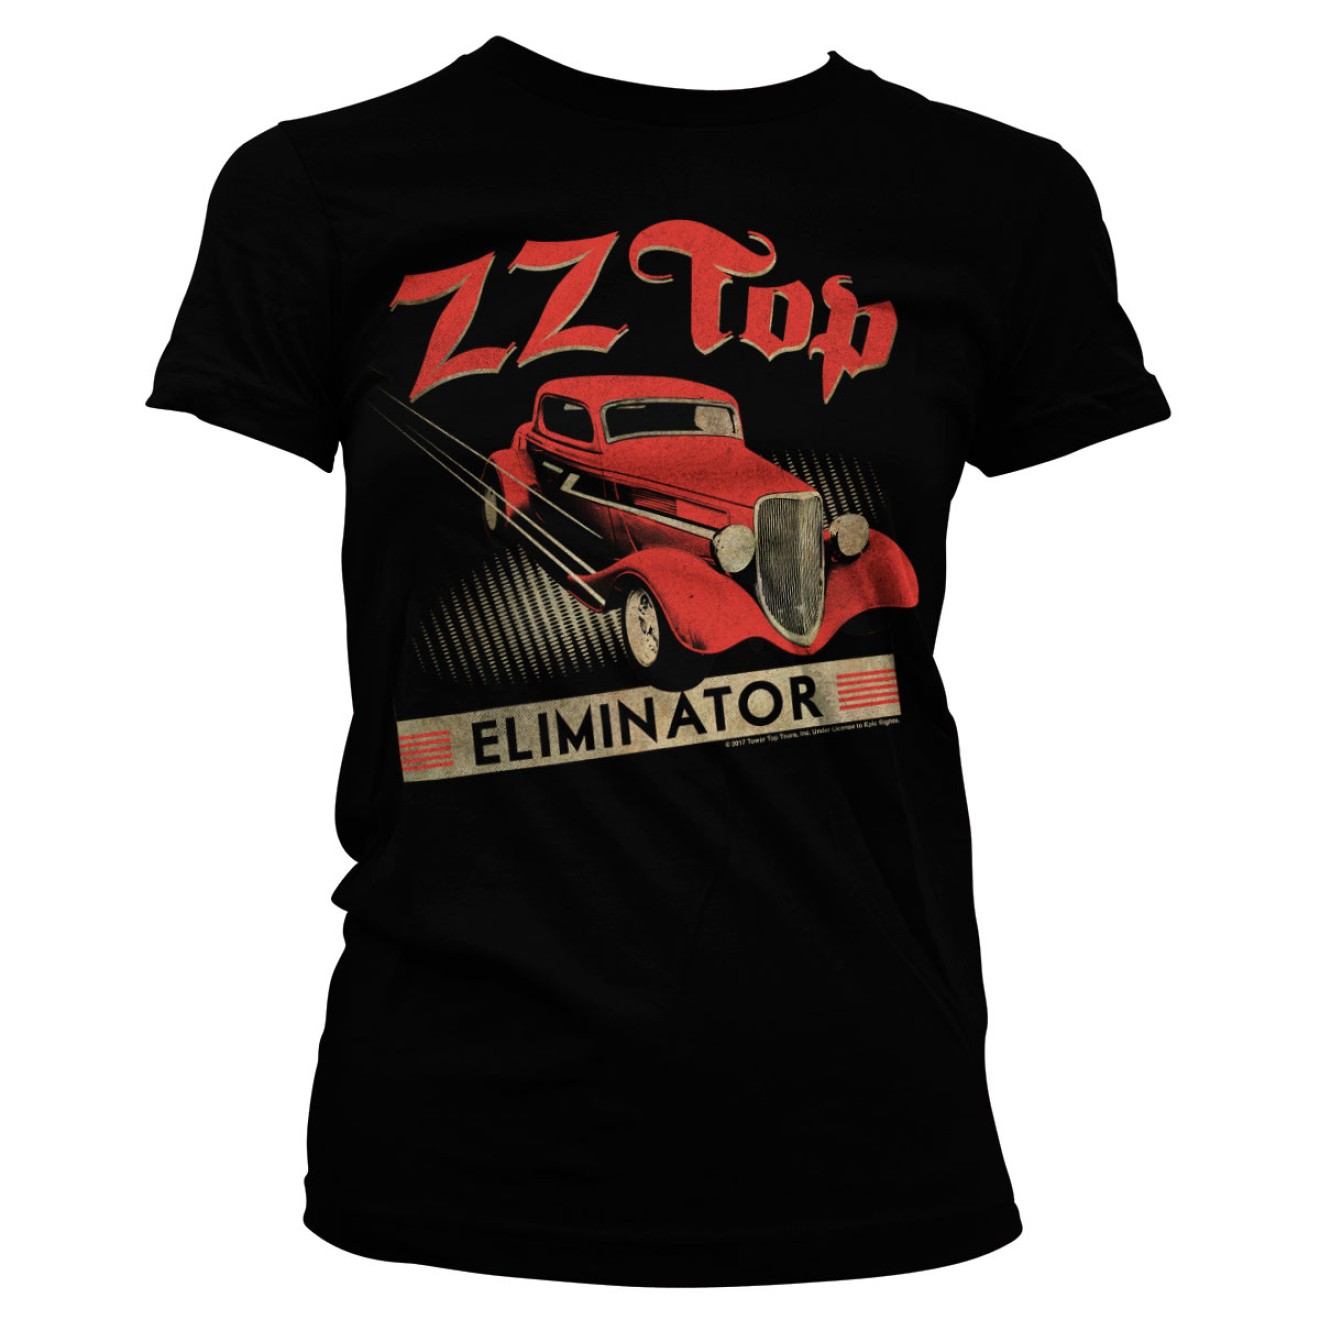 ZZ-Top Eliminator Girly Tee Frauen Top Tshirt